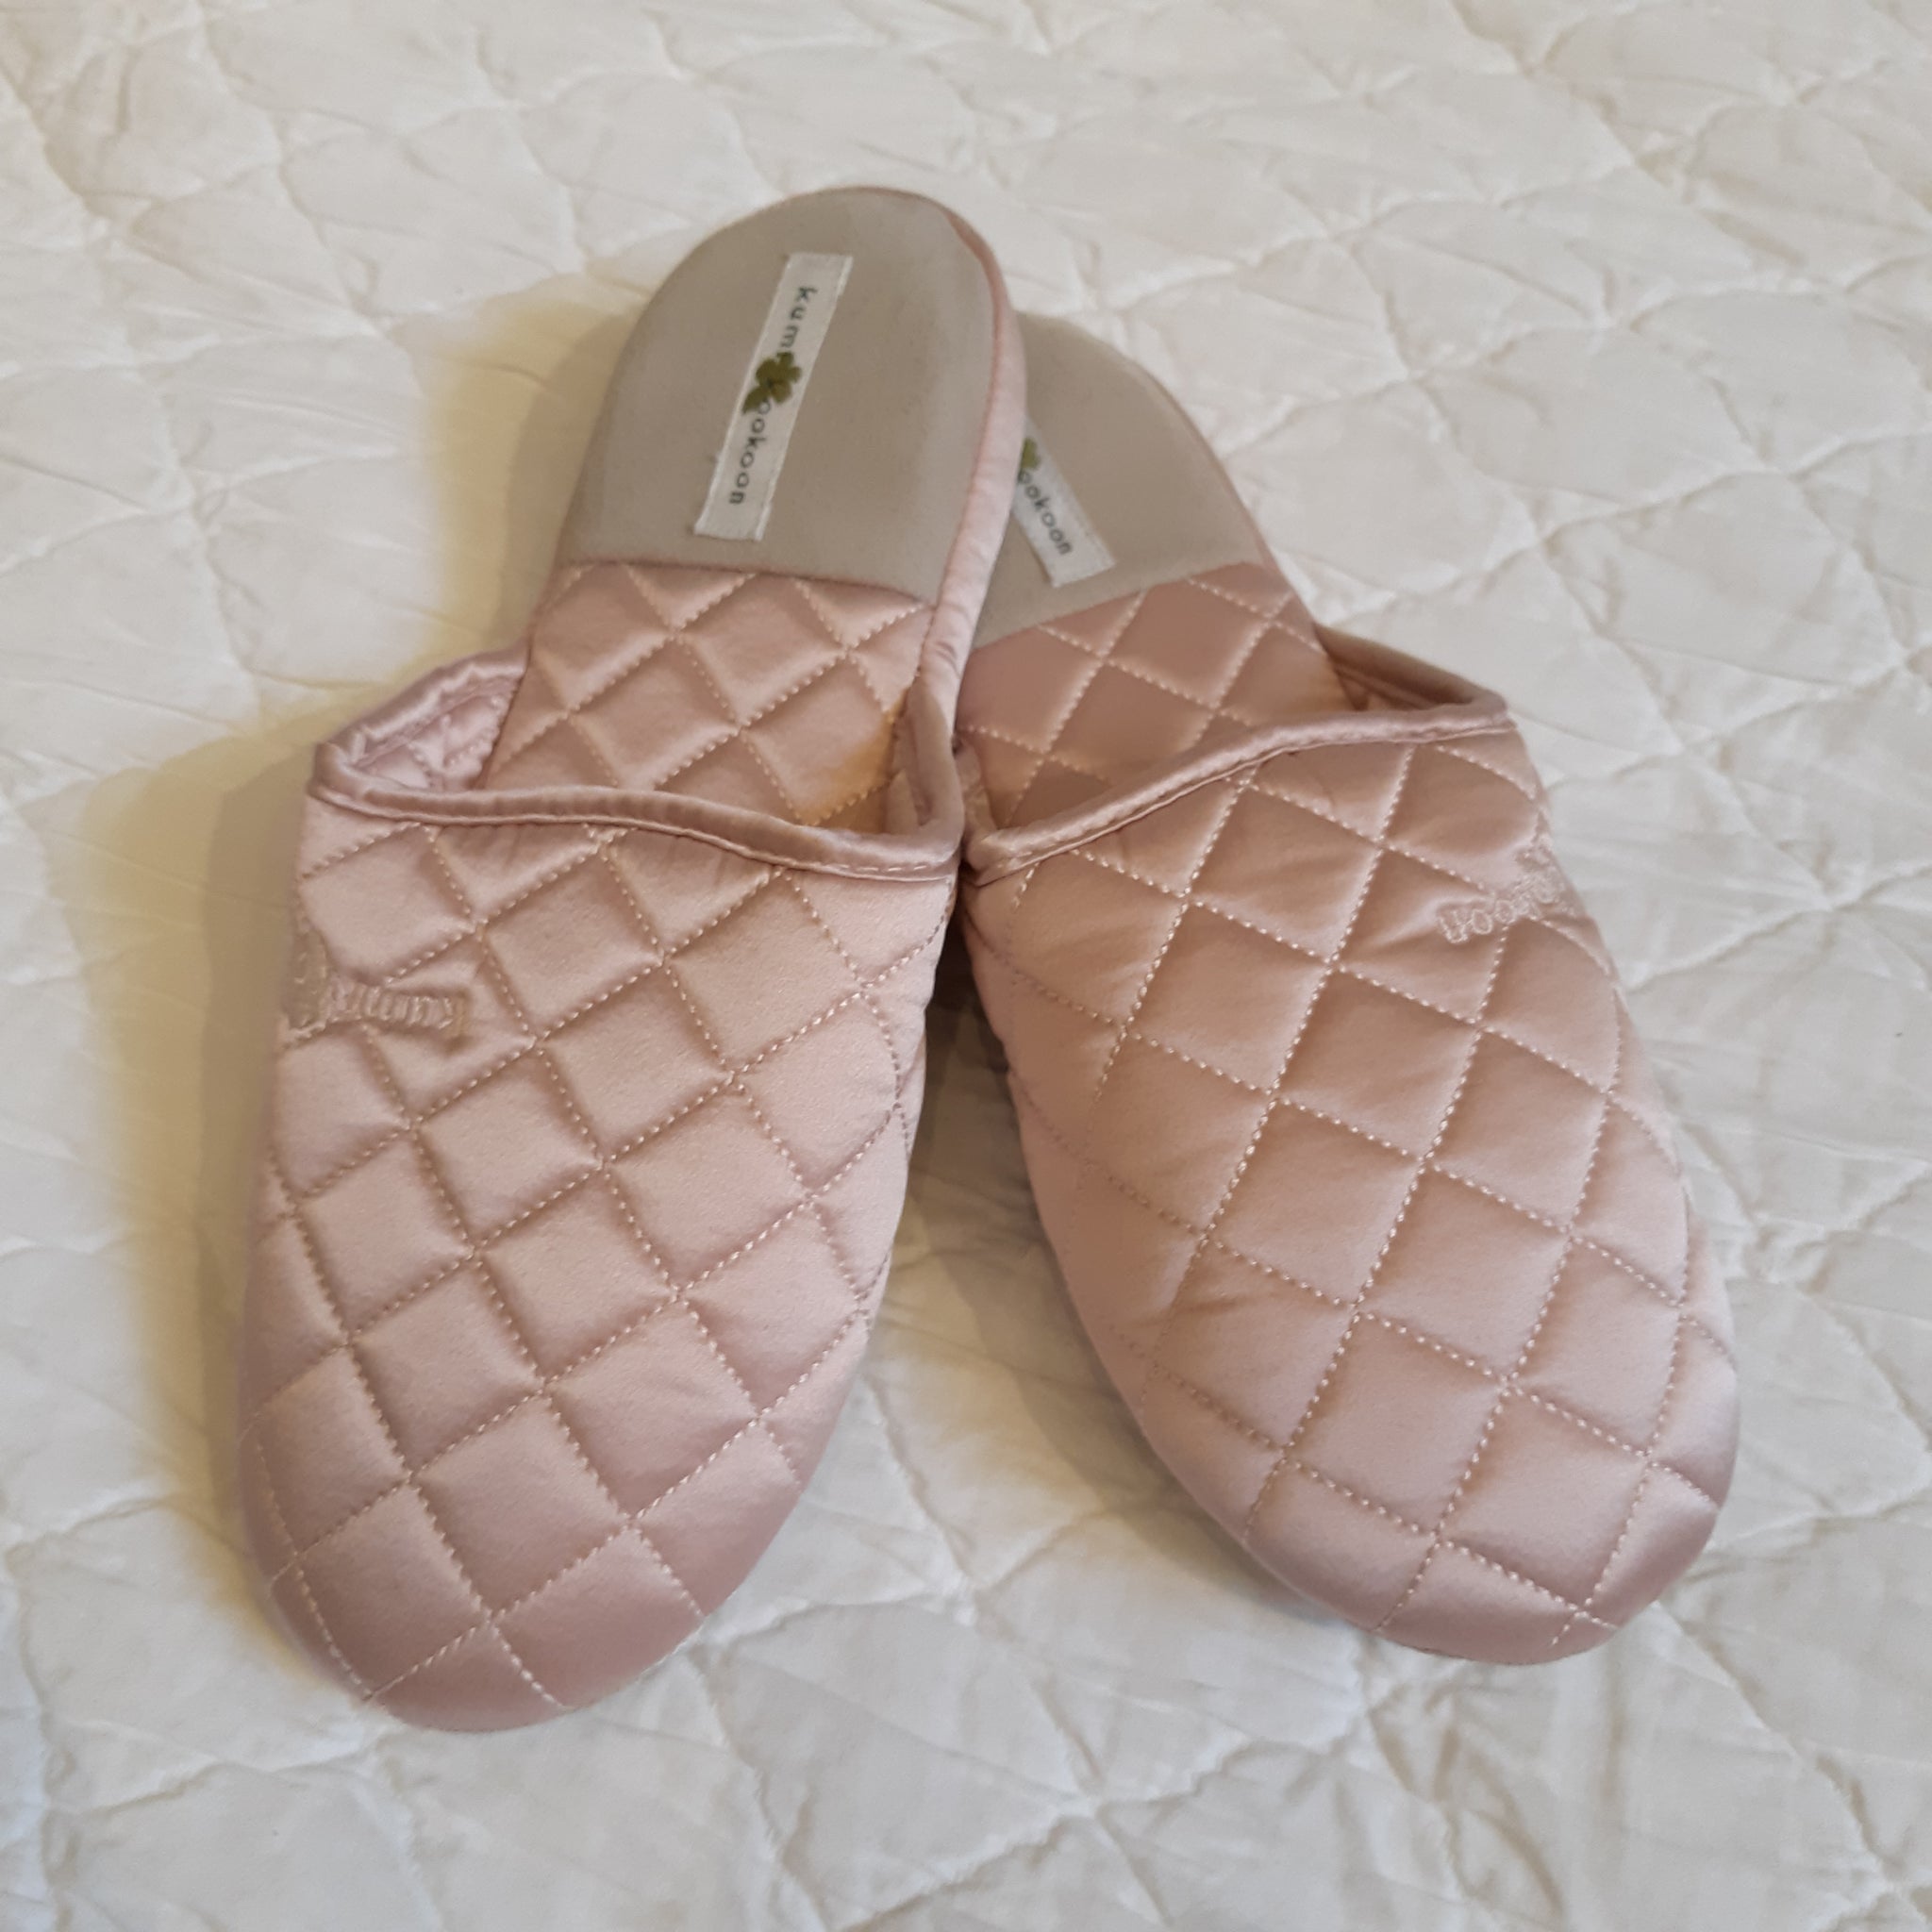 silk slippers